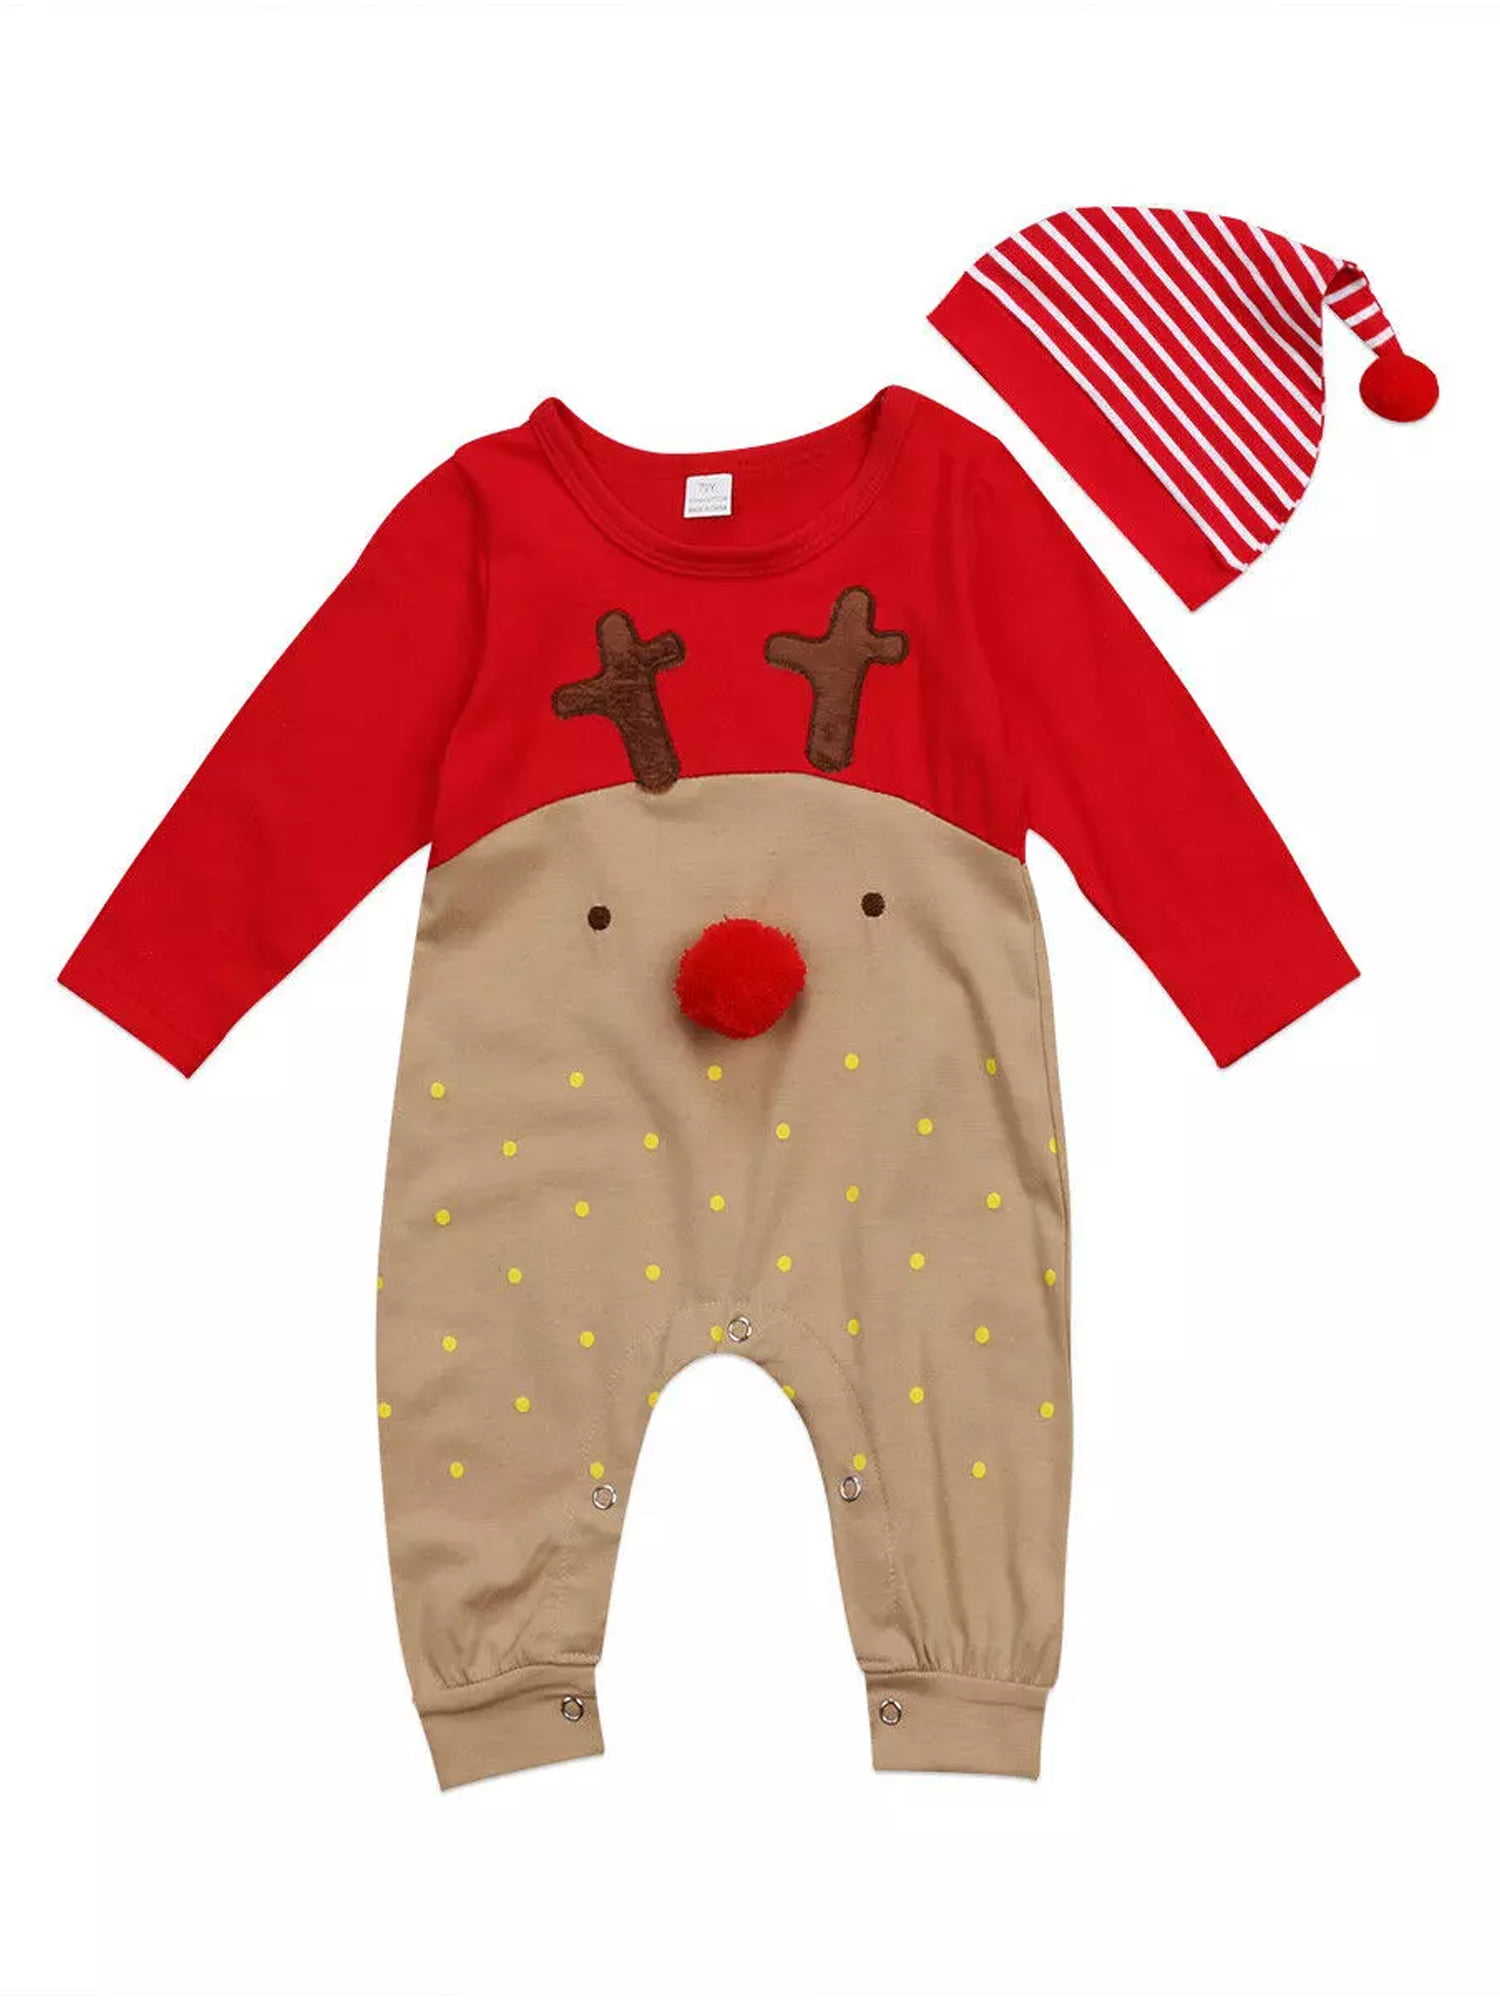 XMAS Baby Girl Boy Toddler Infant Long Sleeve Deer Romper Jumpsuit Pajama Outfit 